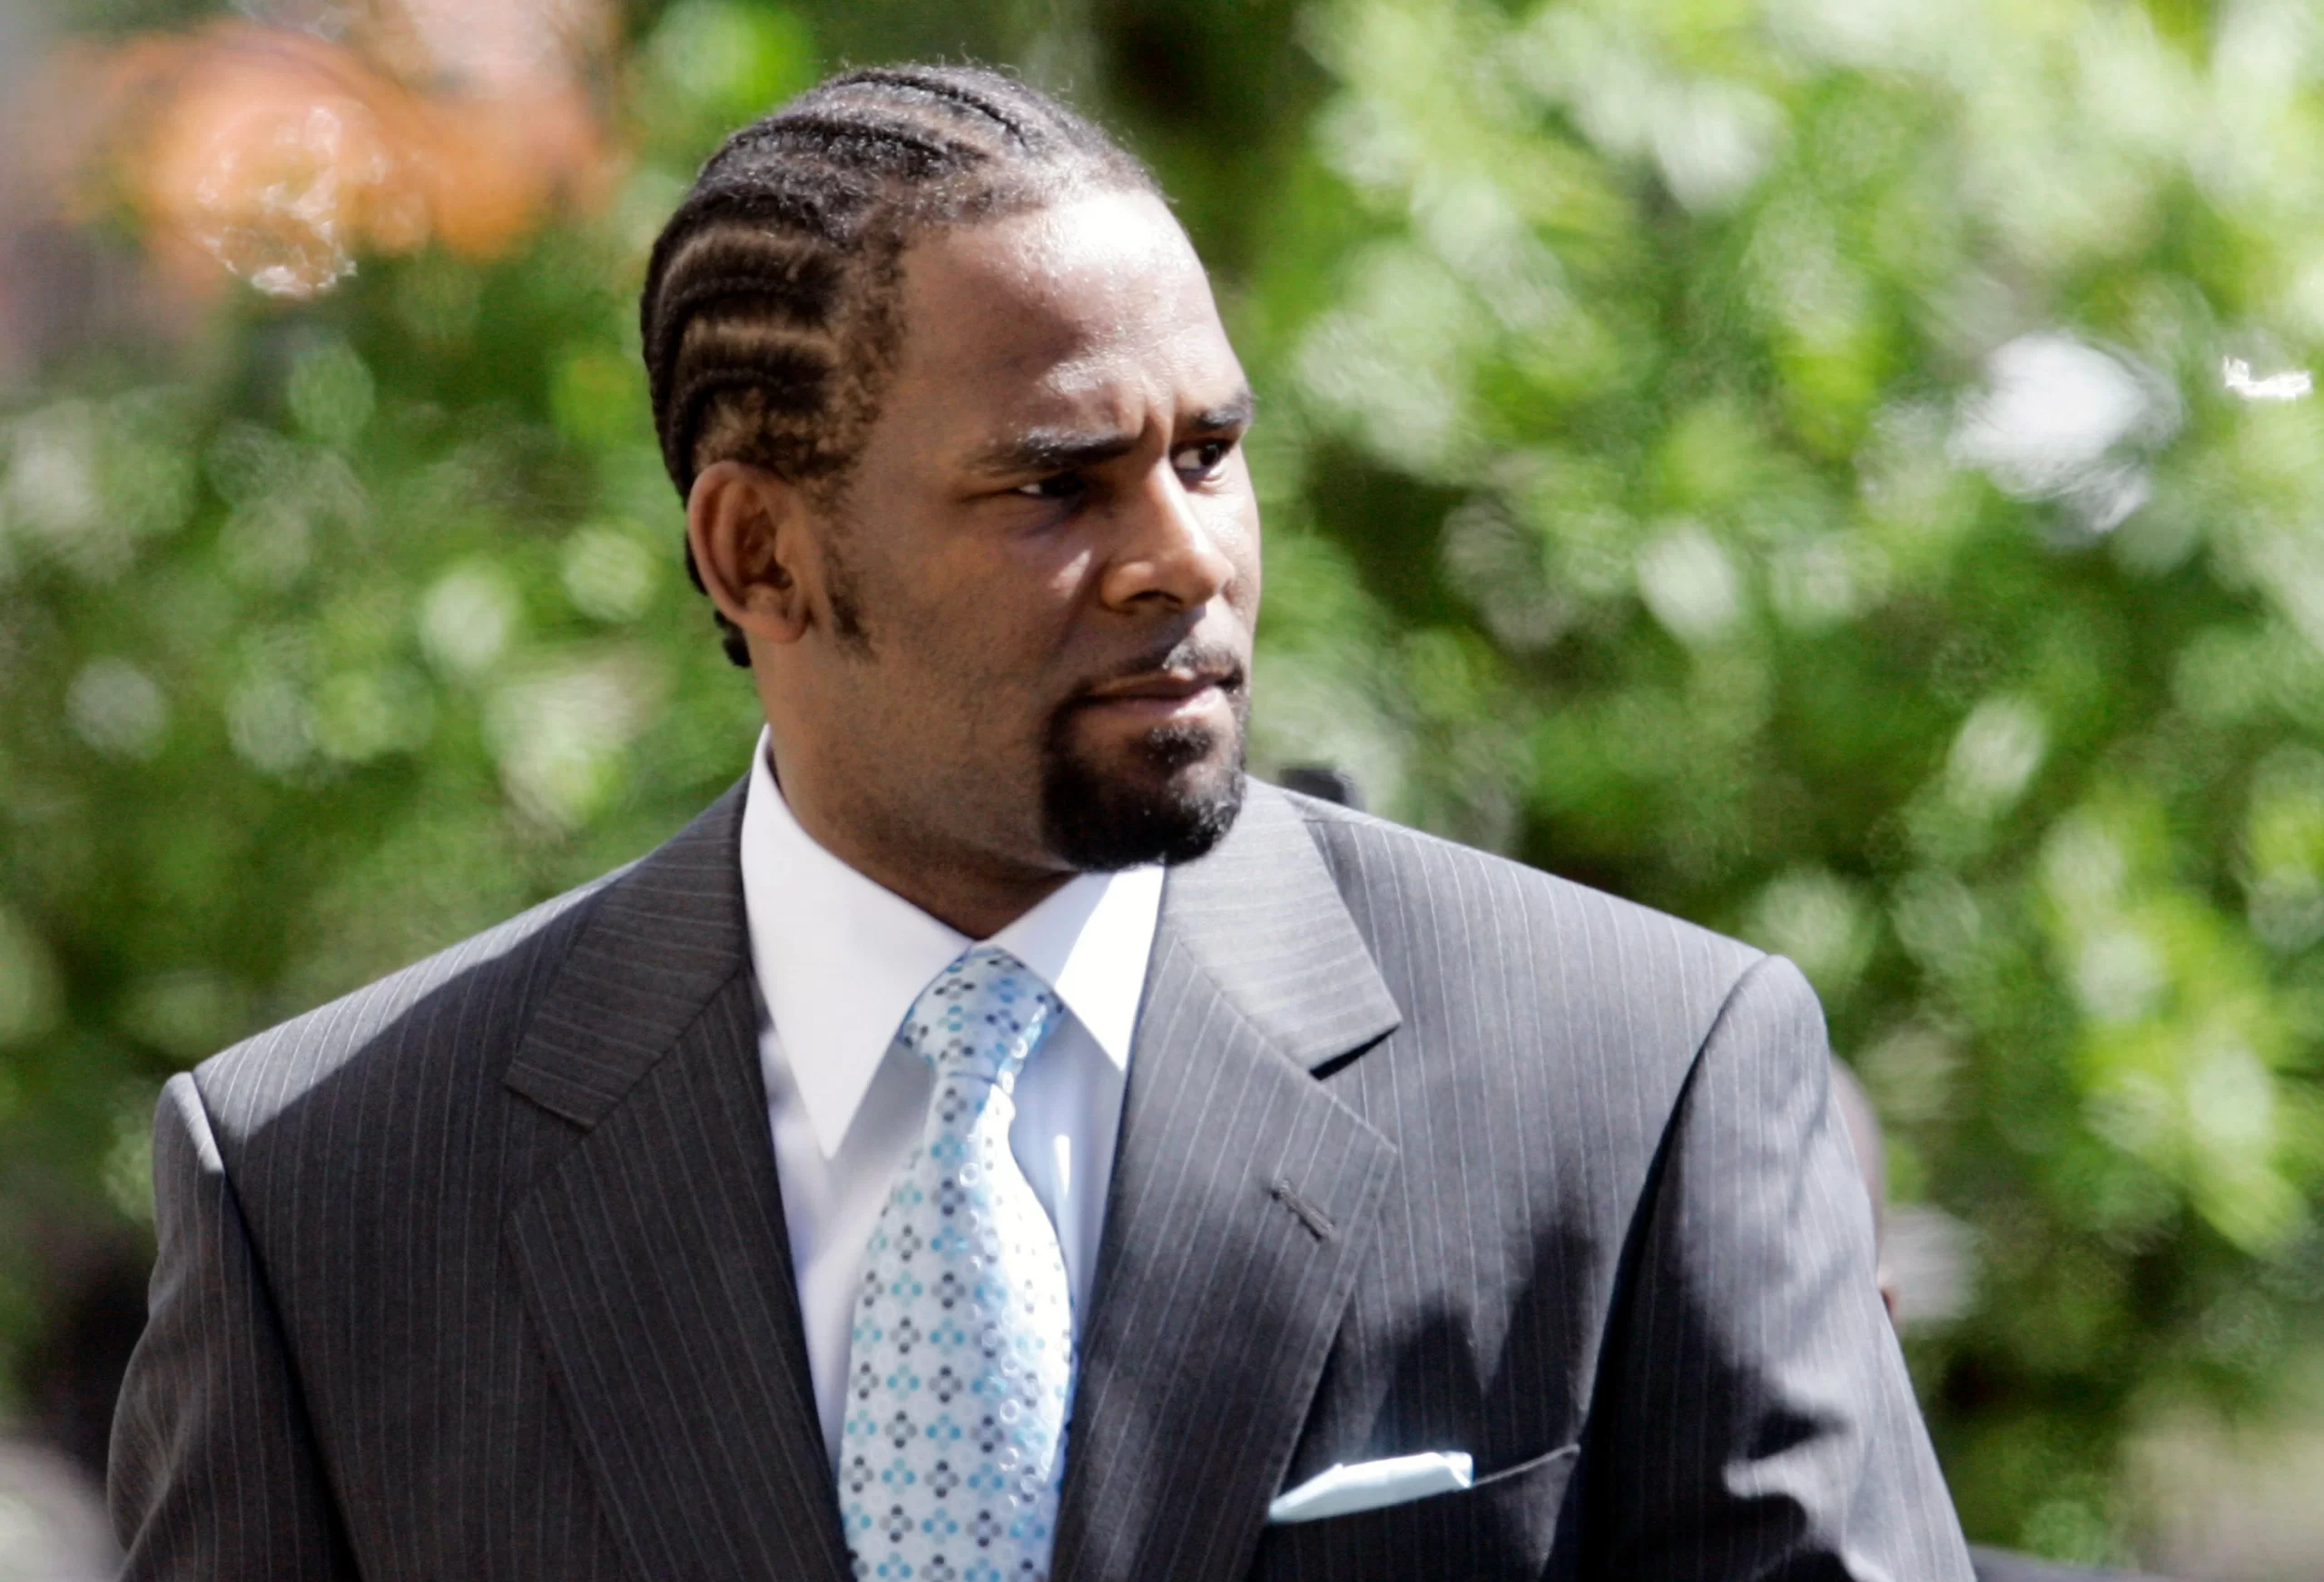 Gospel Music Legend & RnB Singer R. Kelly Found Guilty Of Crimes - Chicago Jury